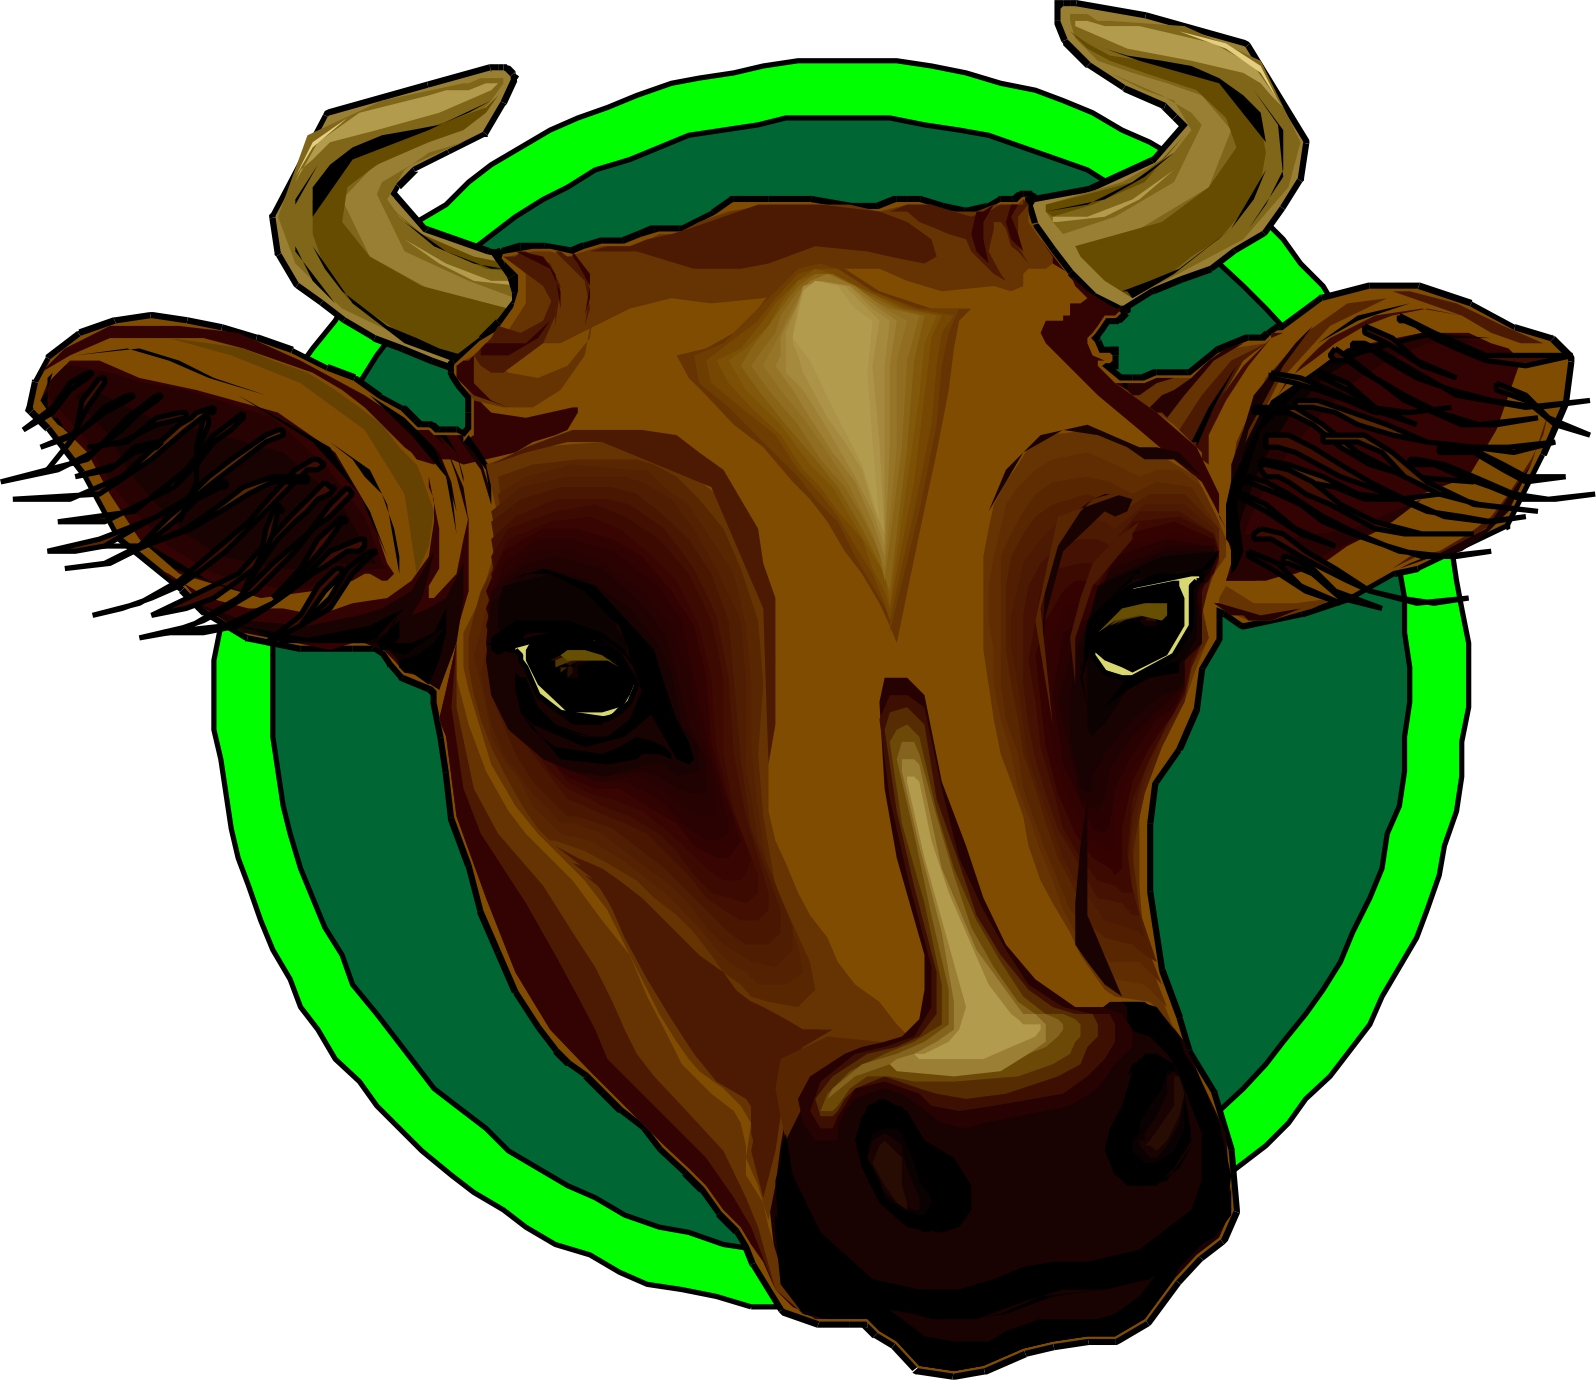 Cow Head Cartoon Images - Cow Head Clip Art | Bodenewasurk